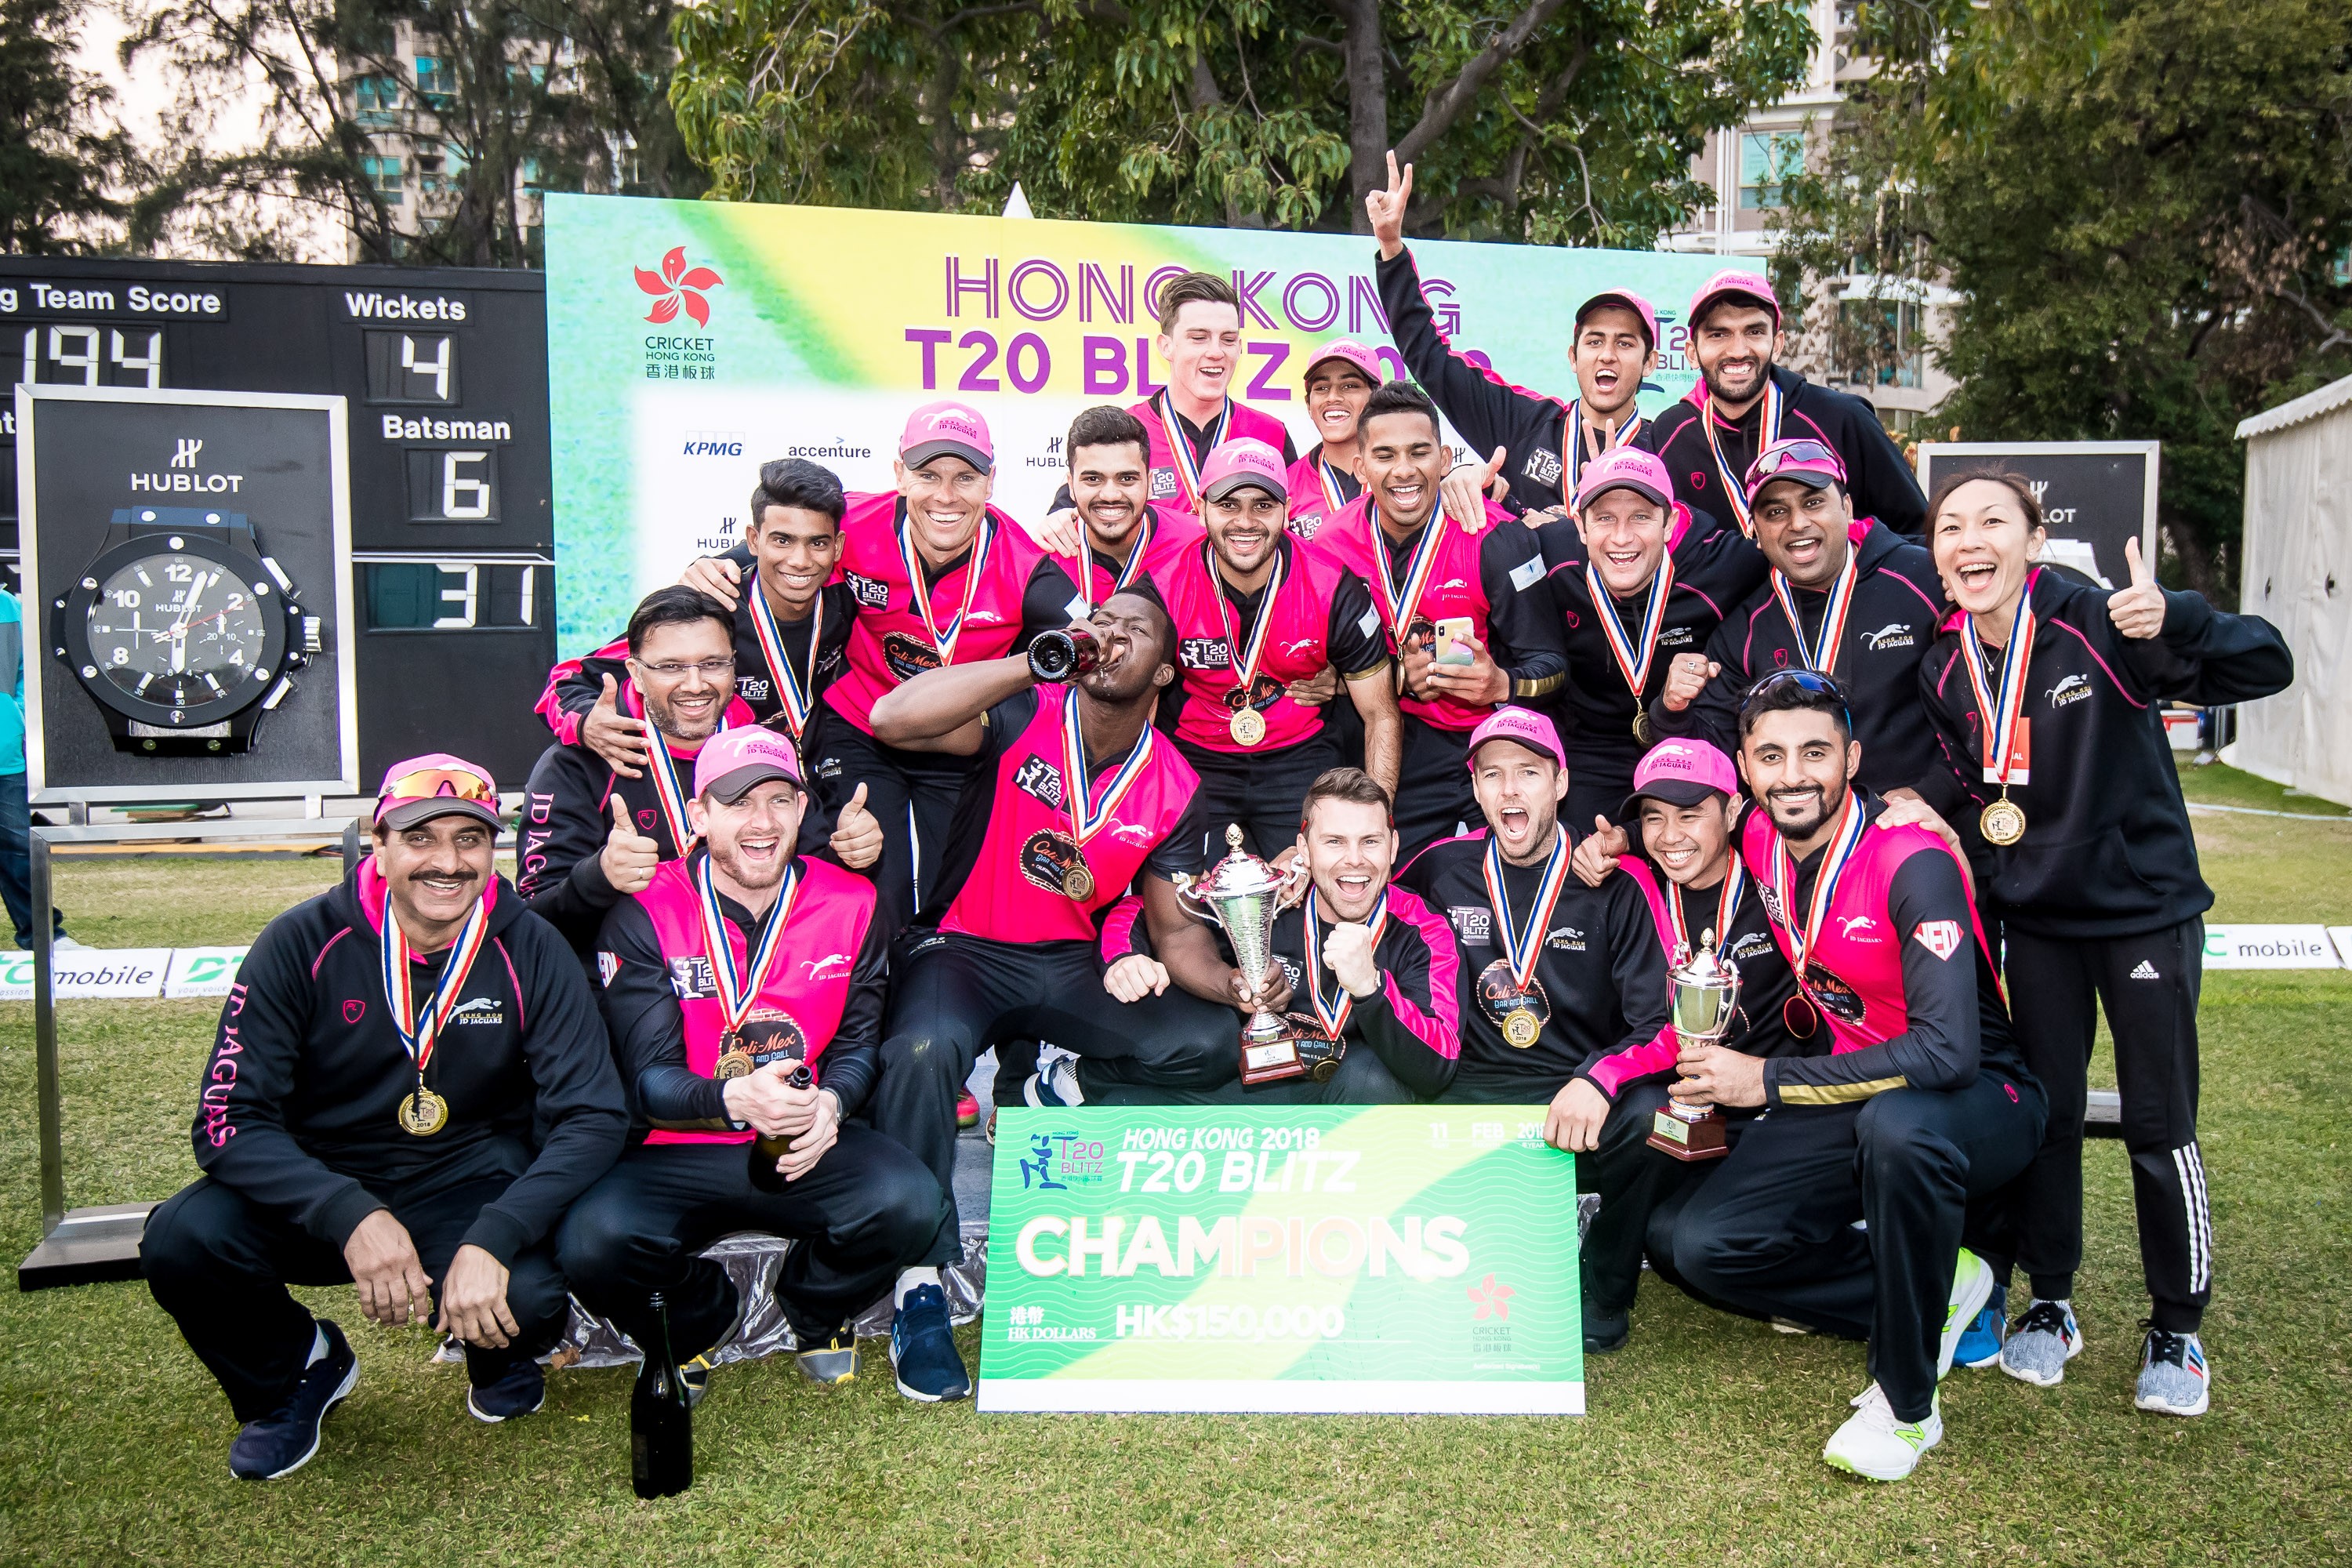 PThe Hung Hom JD Jaguars celebrate winning the Hong Kong T20 Blitz 2018. Photos: Ike Li / Ike Images